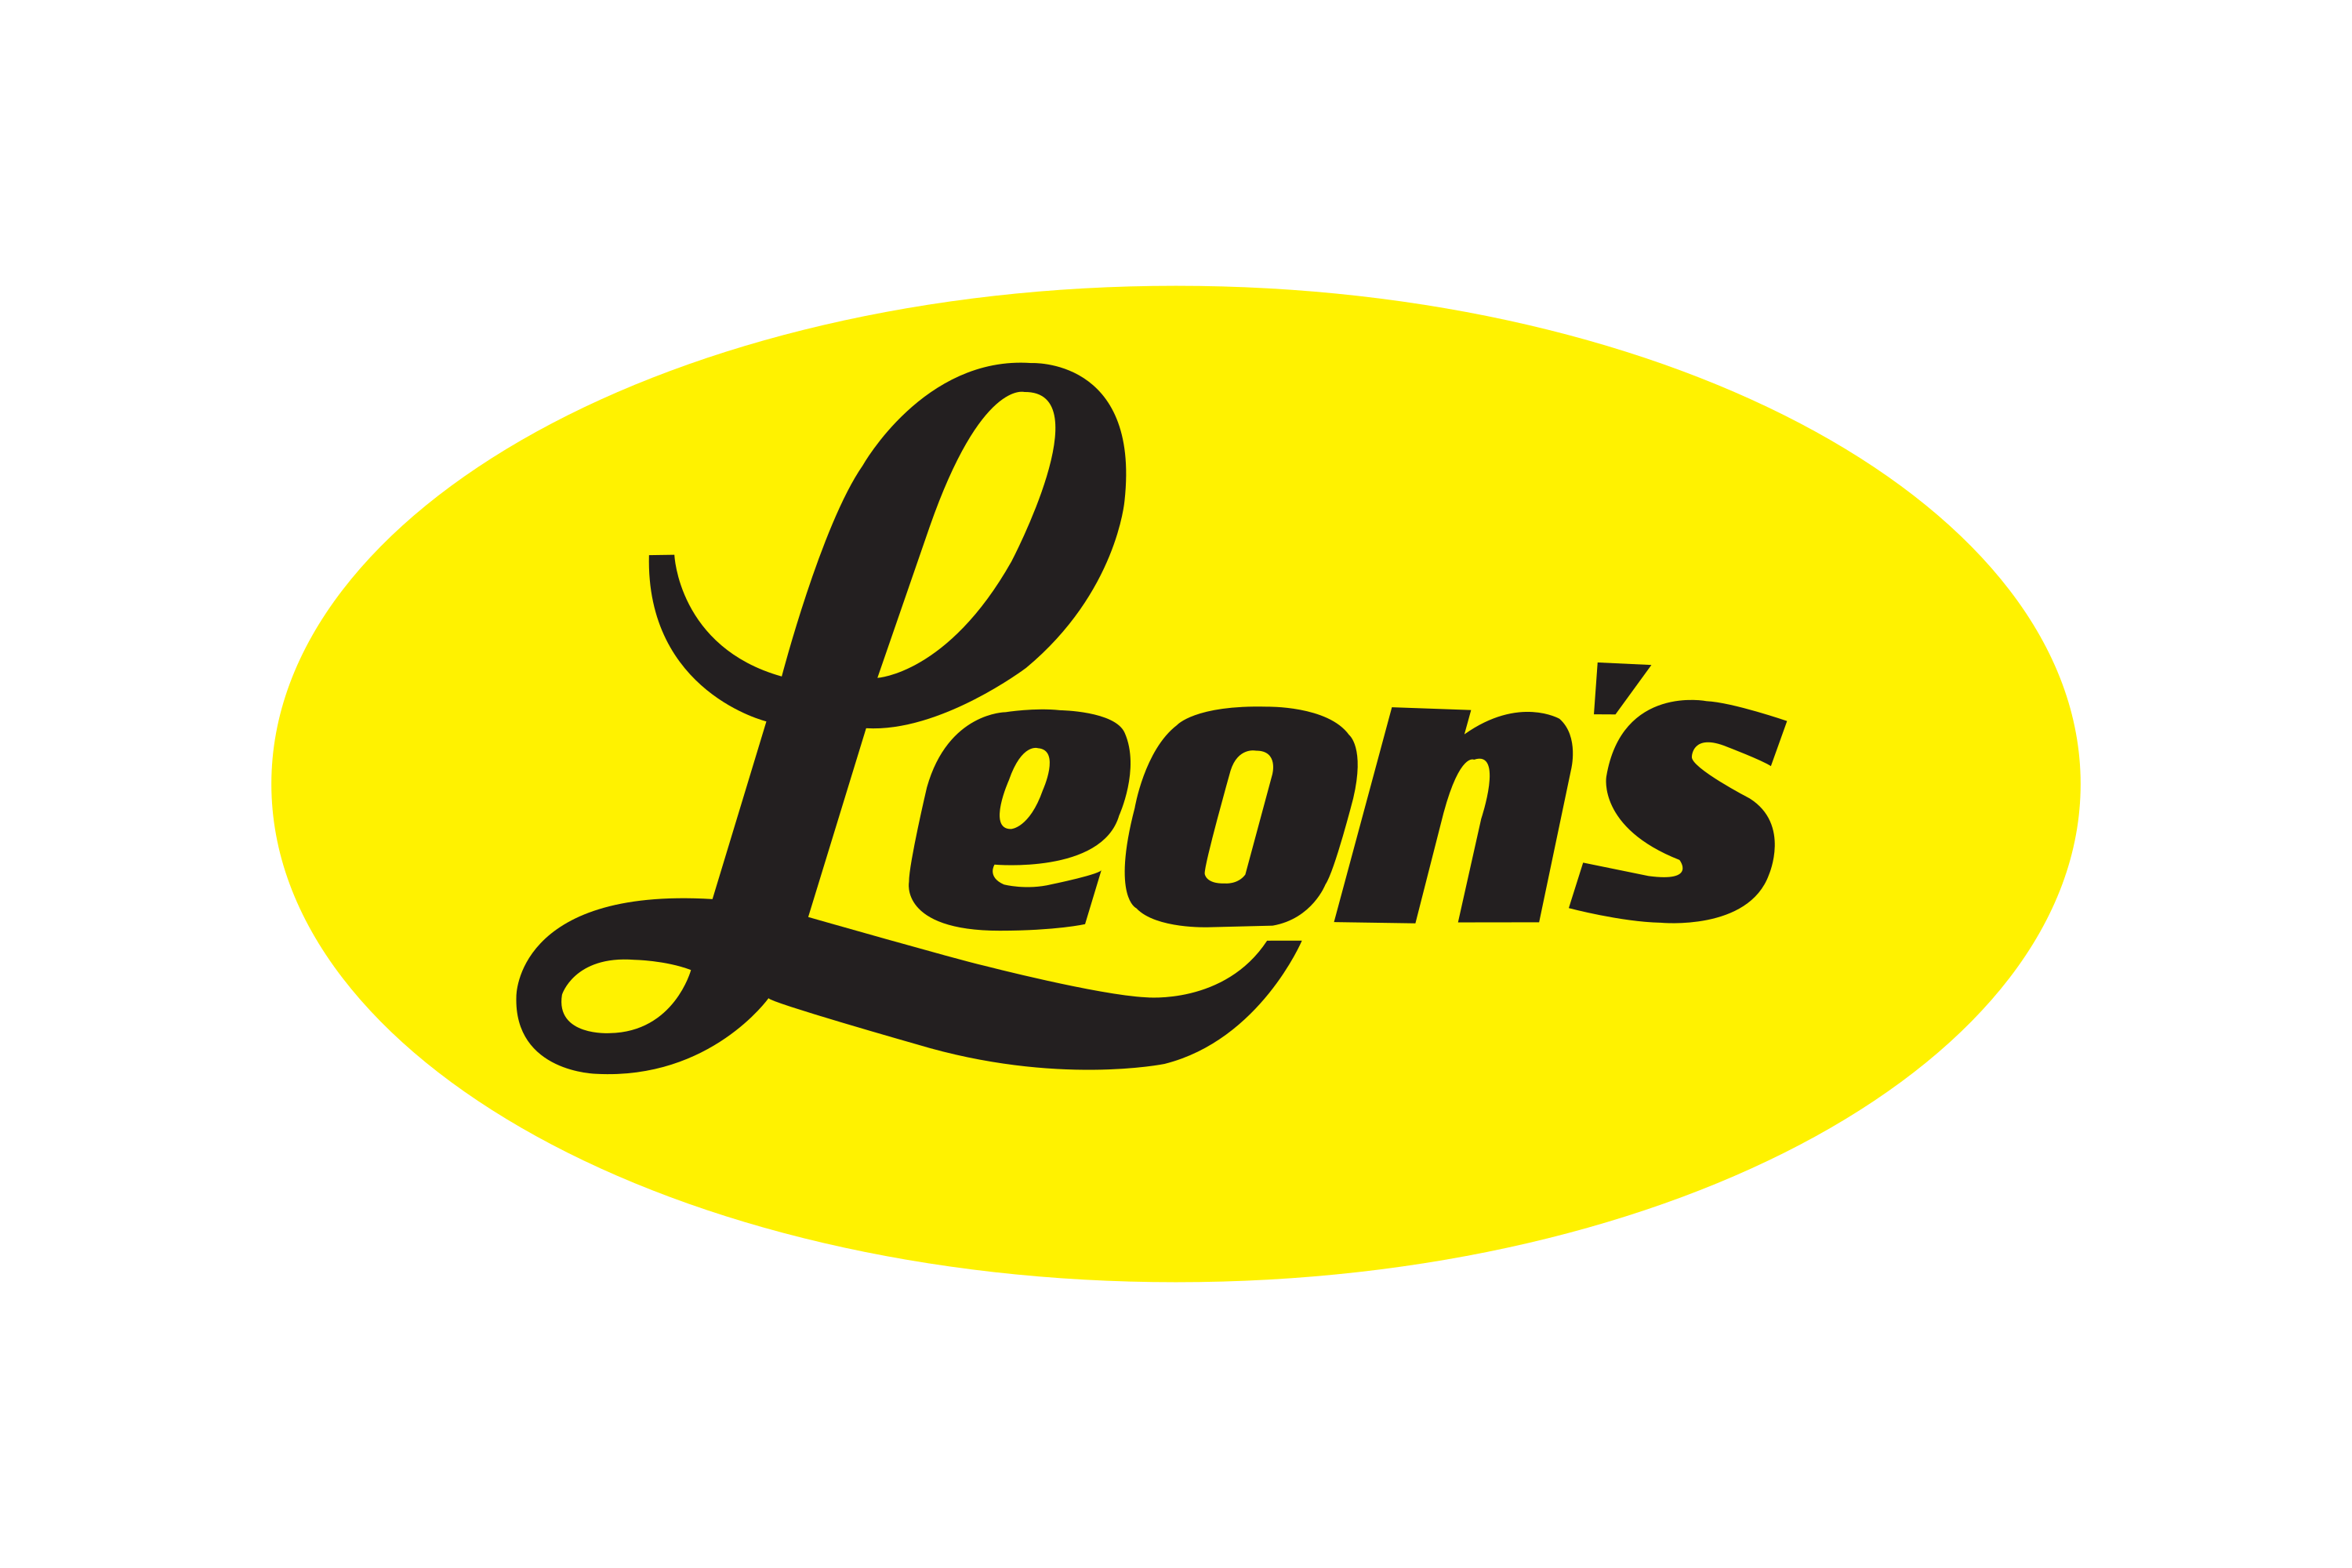 Download Leon's Logo in SVG Vector or PNG File Format - Logo.wine